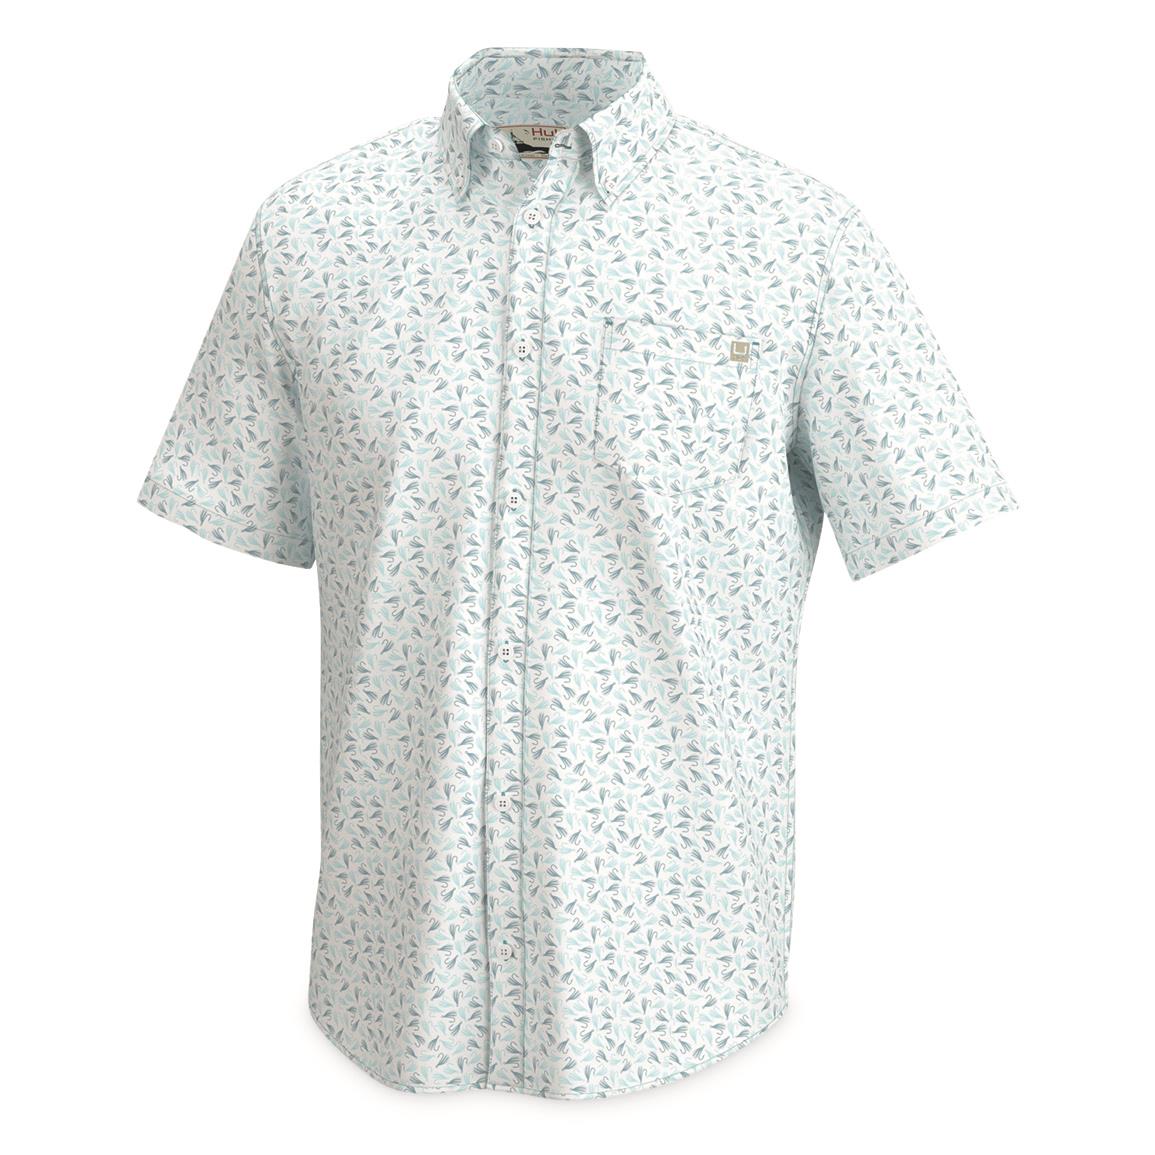 Huk Kona Jig Short Sleeve Button Up Shirt, Ipanema